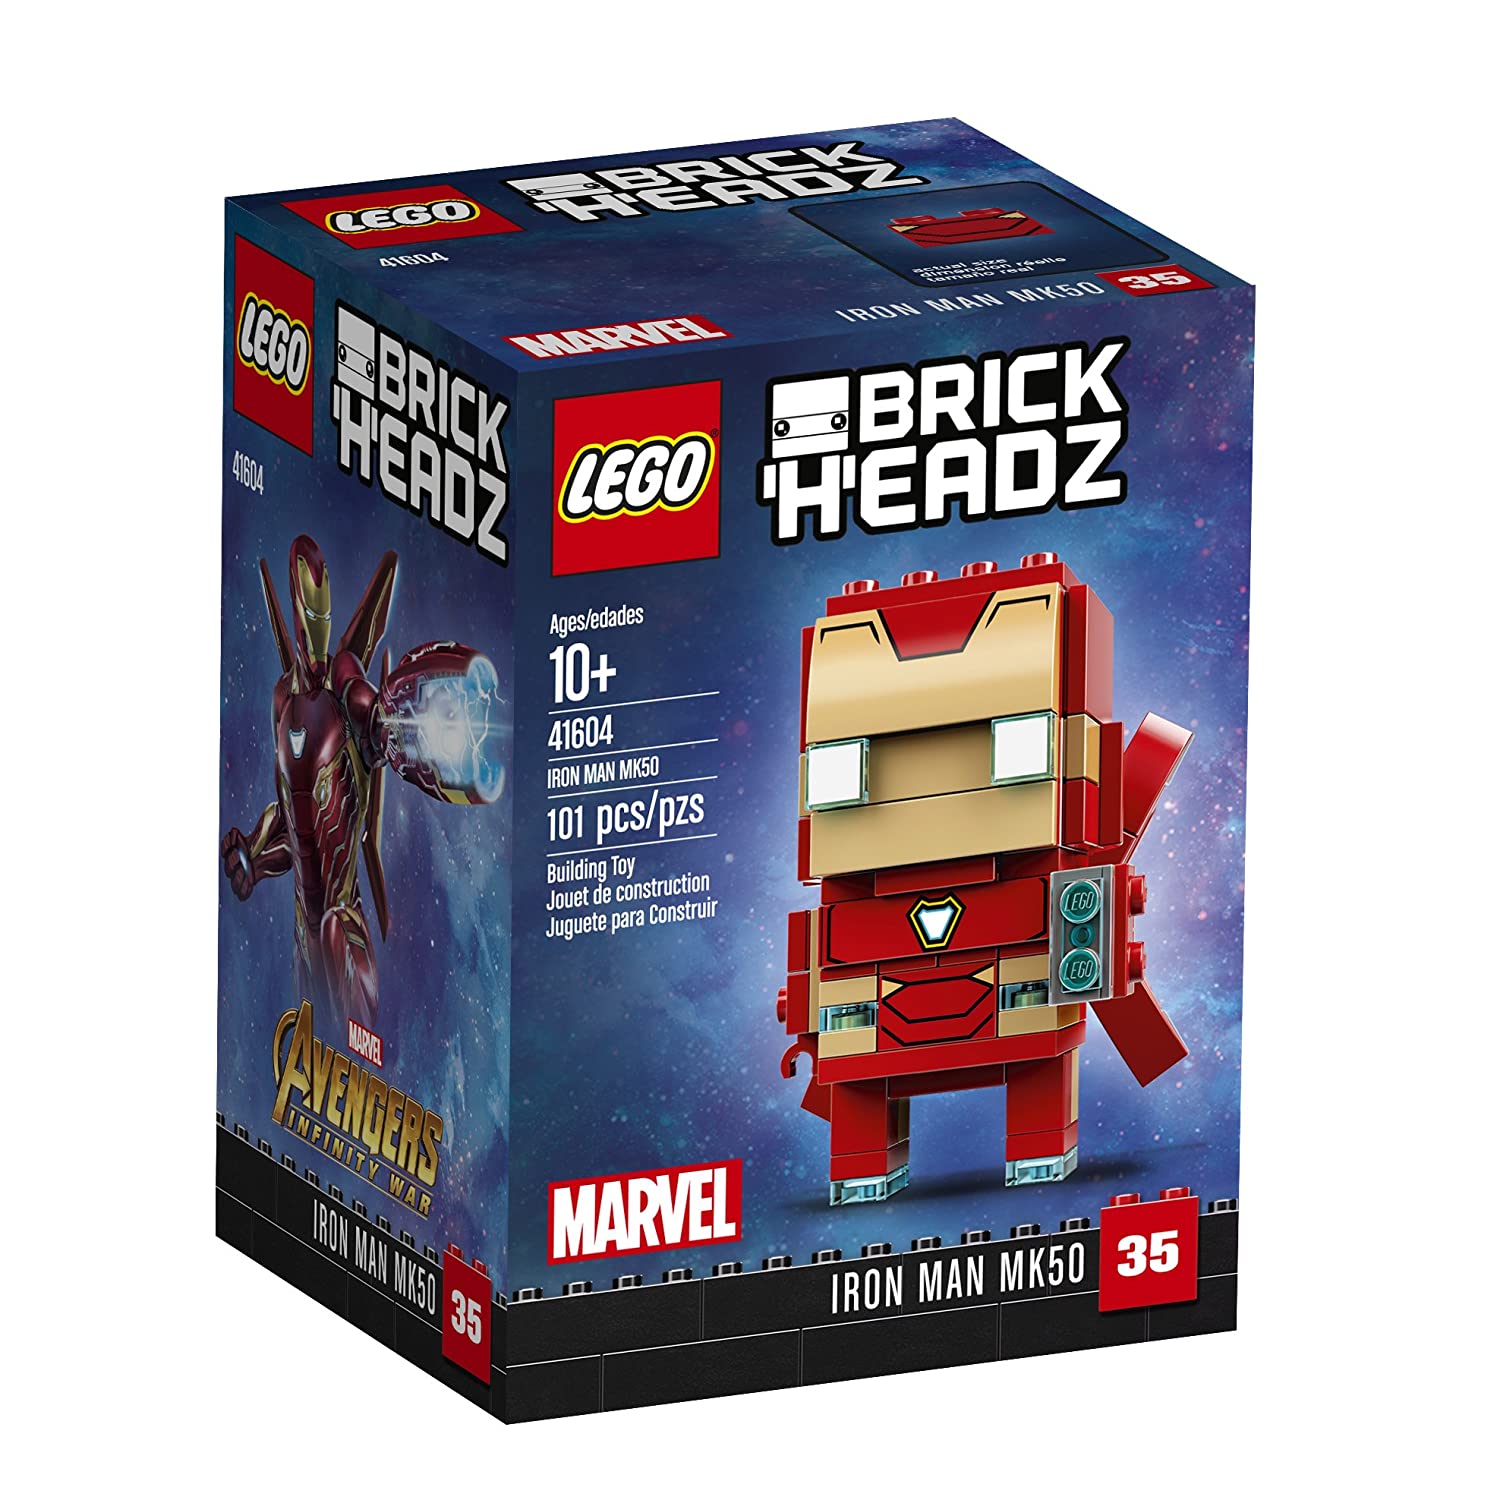 11 Best Lego Brickheadz 2023 - Buying Guide & Reviews 8